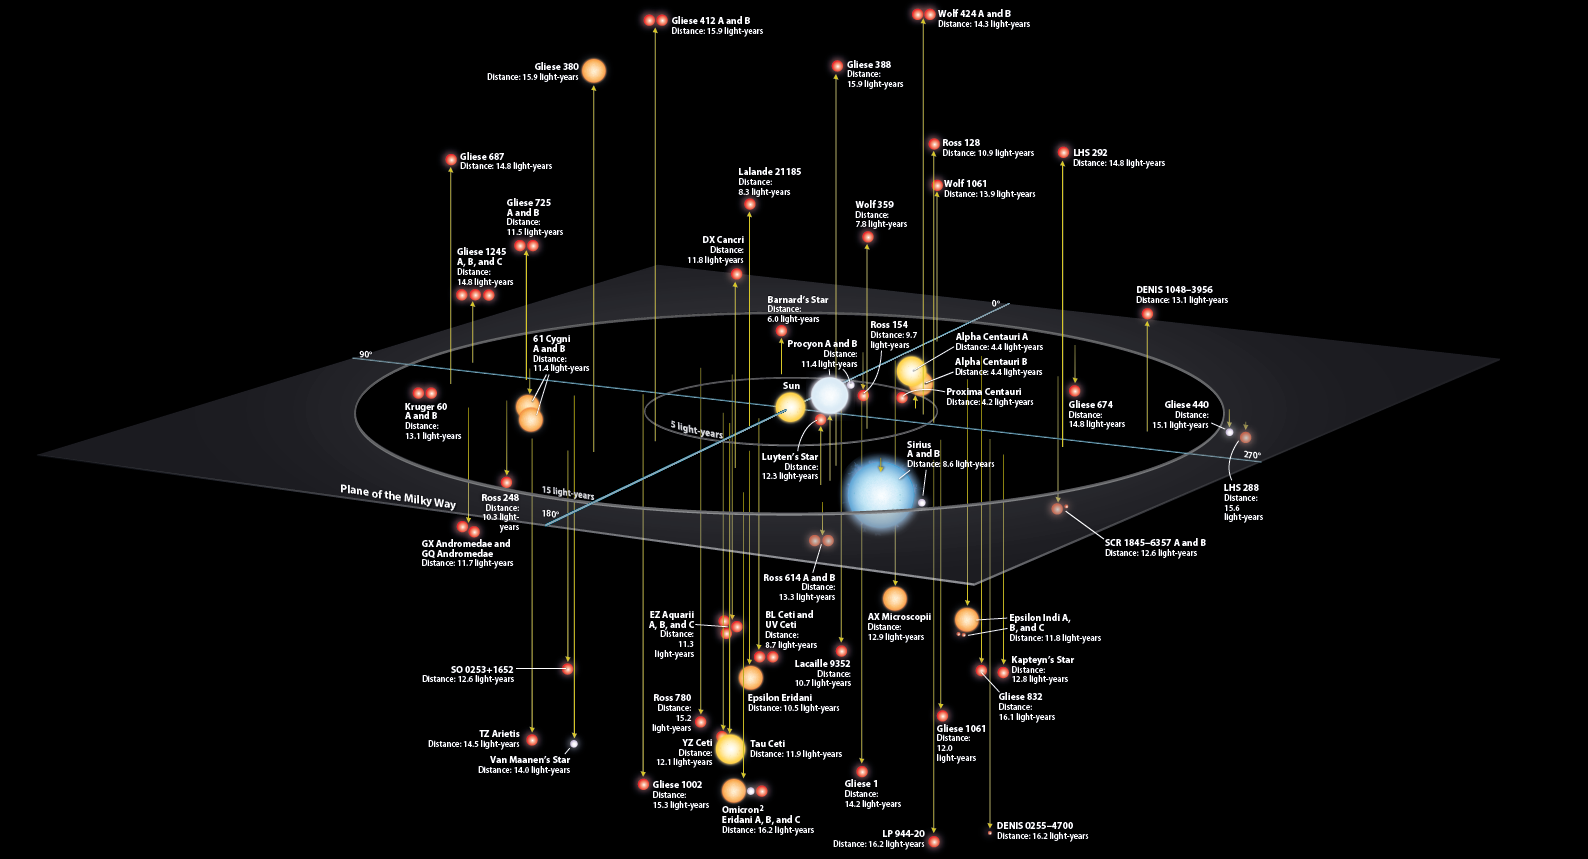 solar system light years